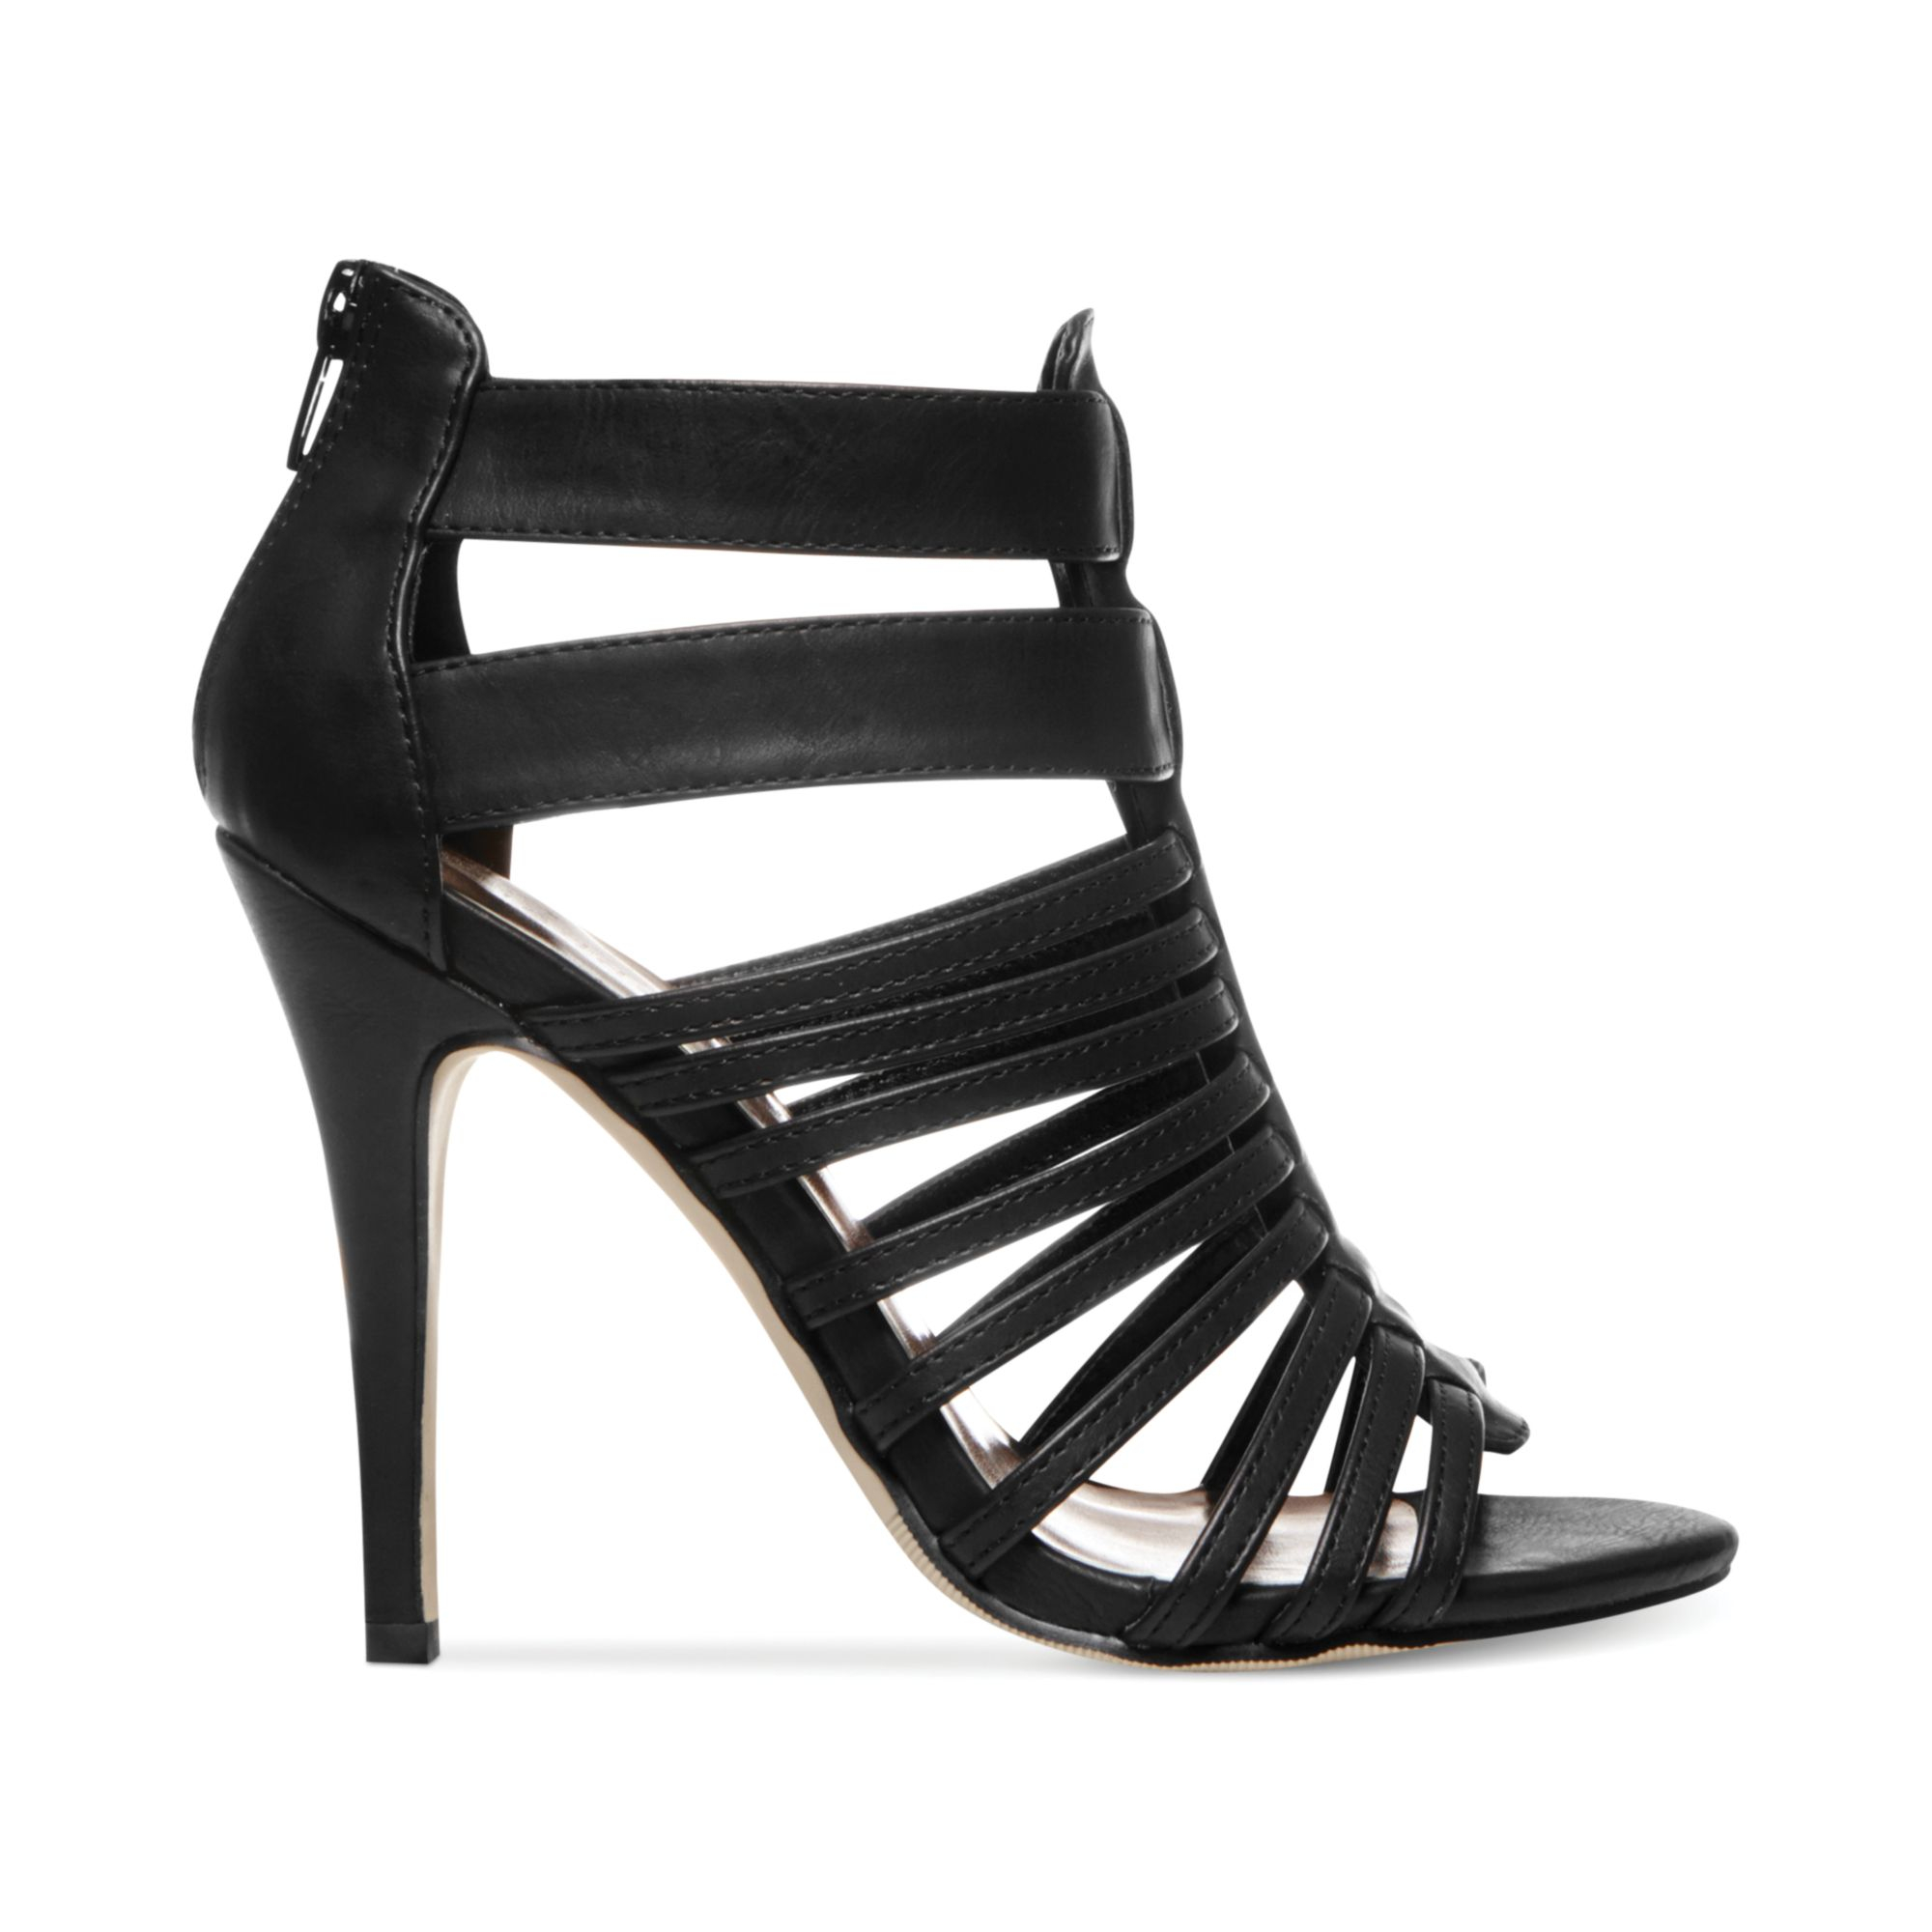 Madden Girl Debbra Caged Sandals in Black (Black Smooth) | Lyst